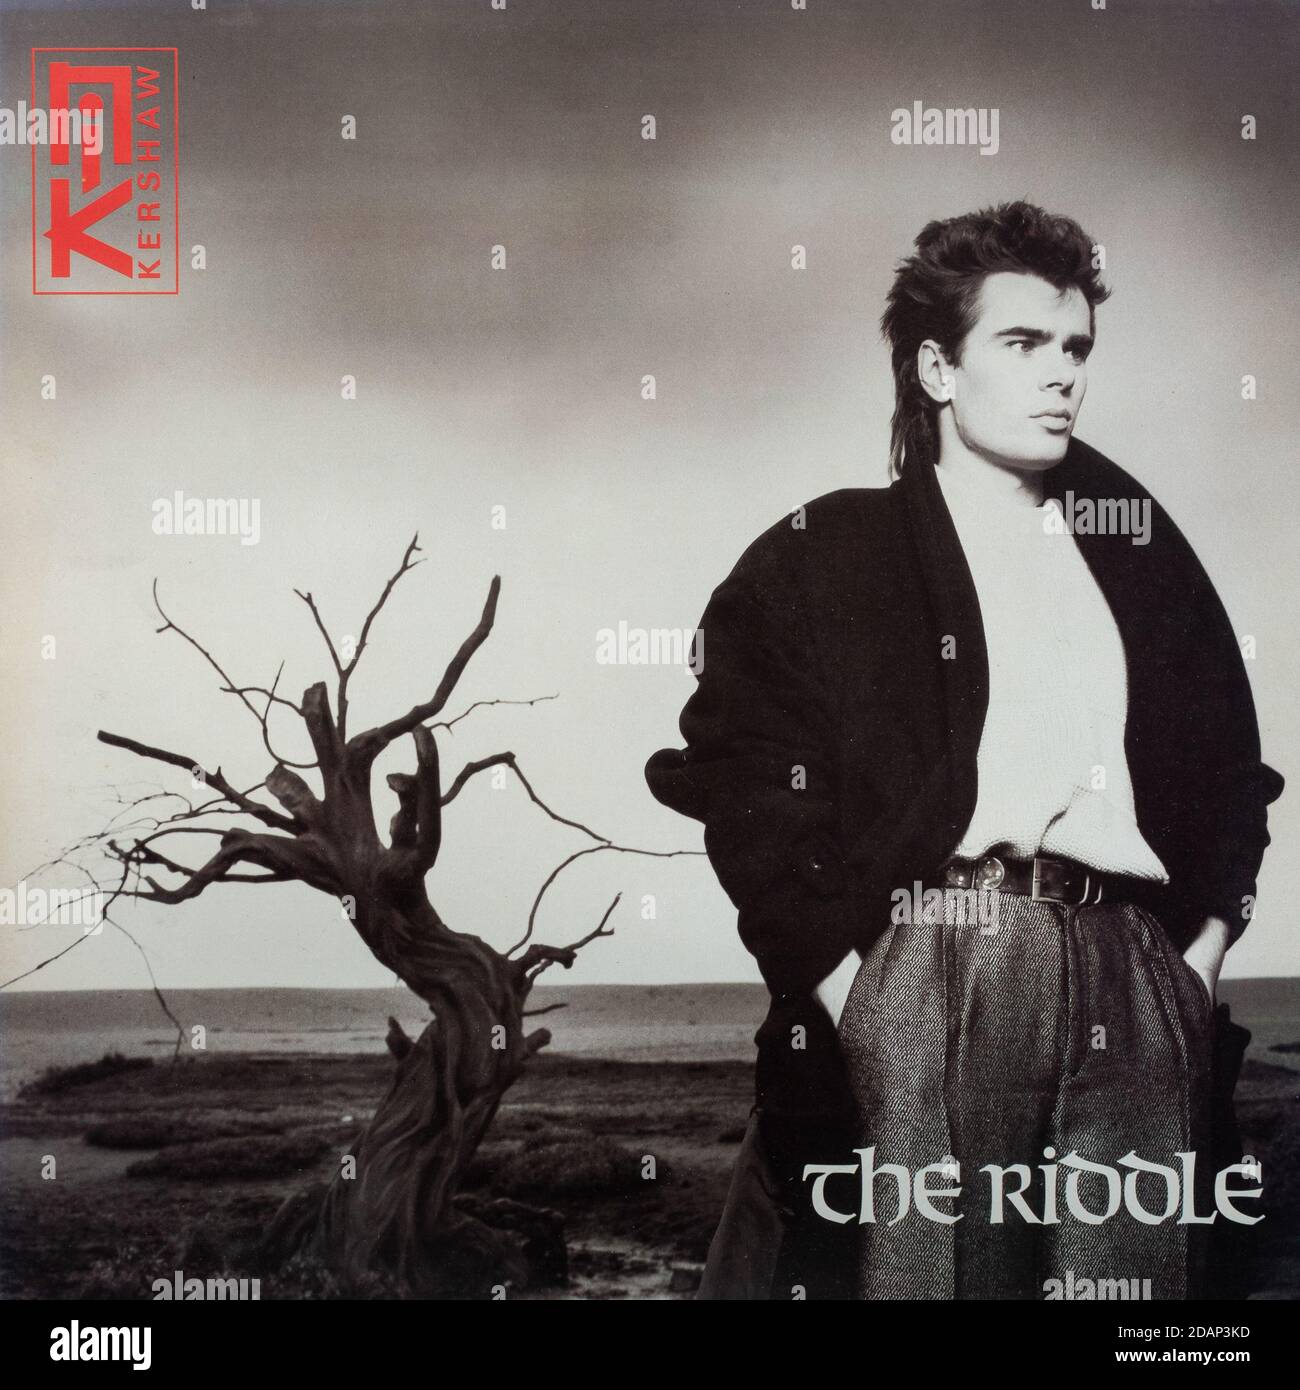 Nik Kershaw The Riddle, vinyl LP record album cover Stock Photo